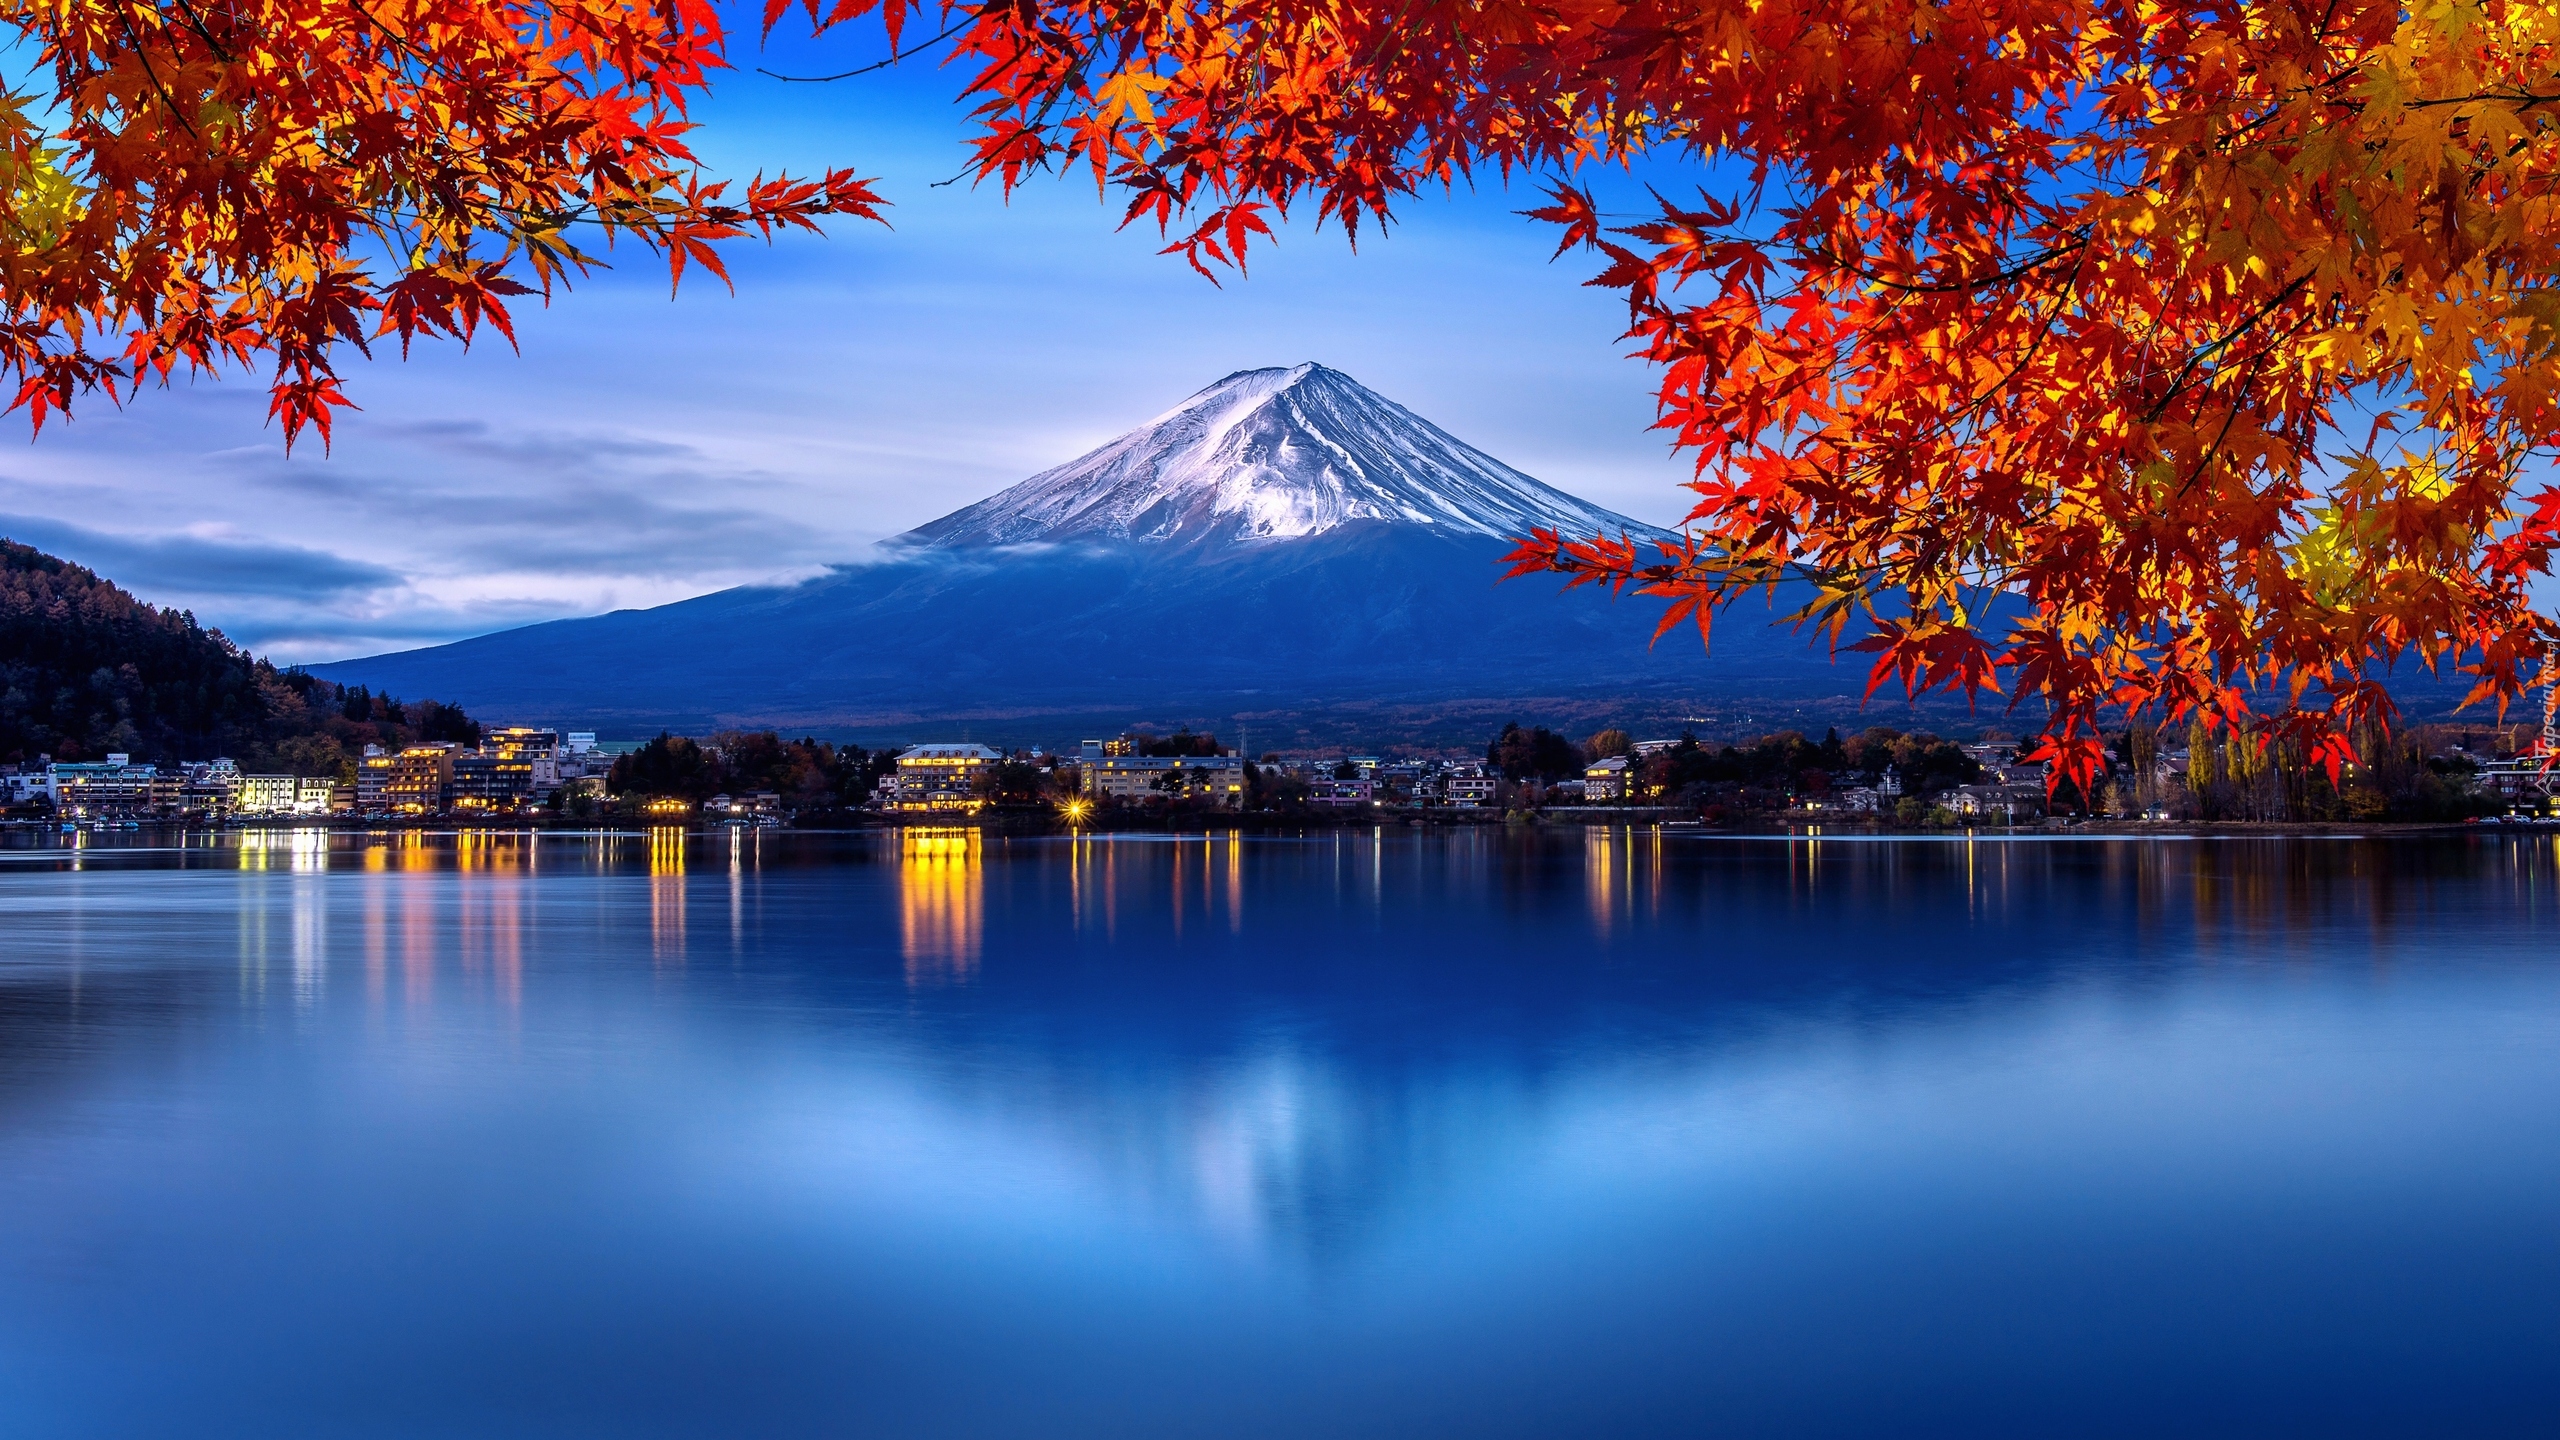 Japonia, Góra Fudżi, Stratowulkan, Jezioro, Lake Kawaguchi, Drzewa, Klon, Liście